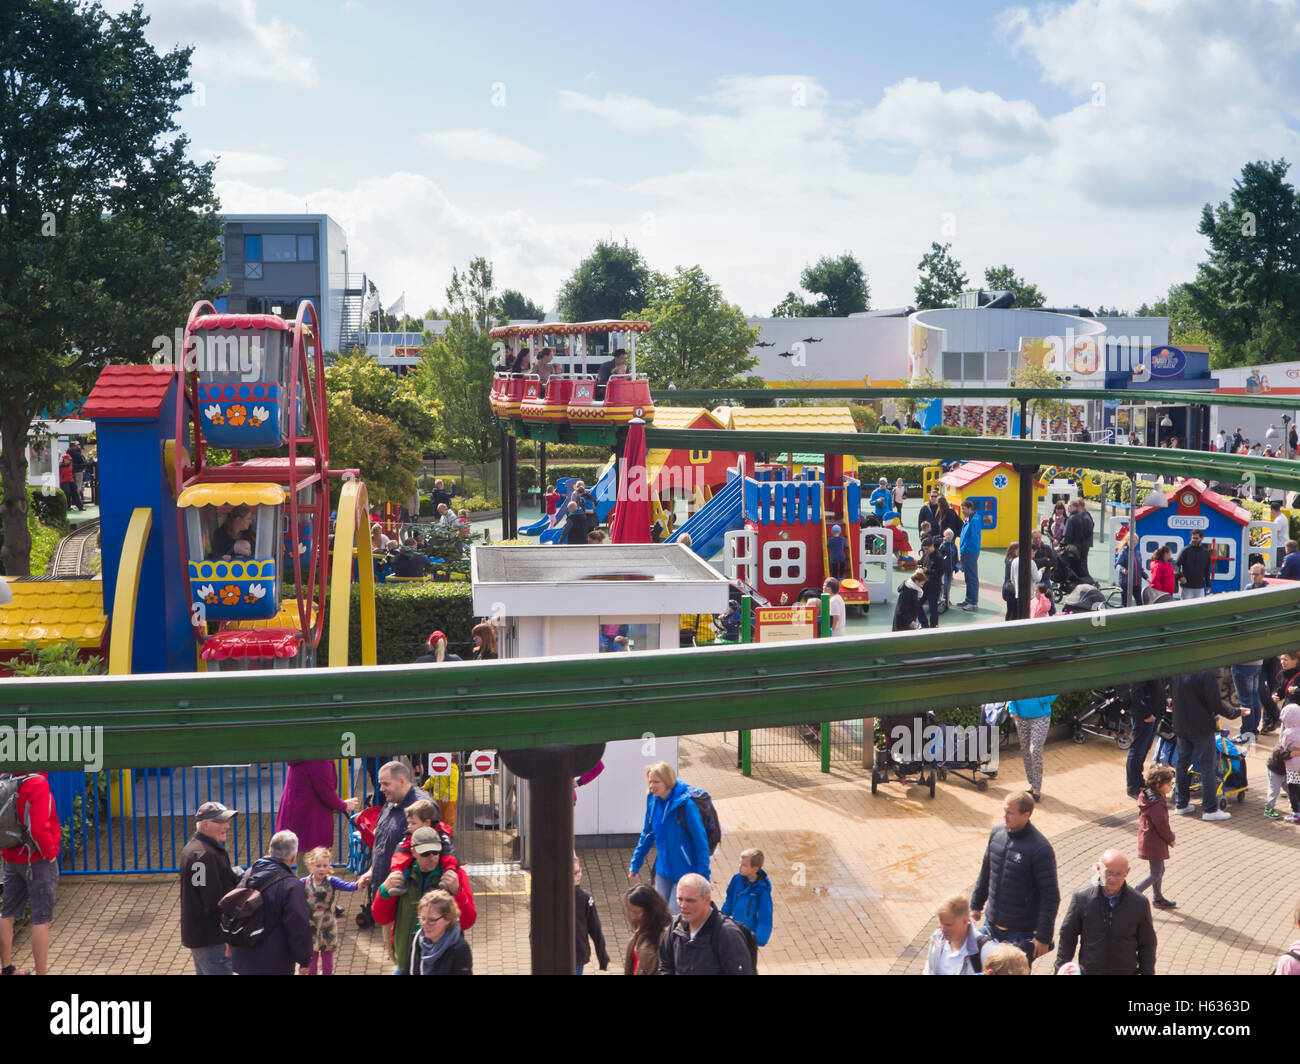 Lego Duplo attractions in Legoland Billund Denmark for the smaller kids  Stock Photo - Alamy